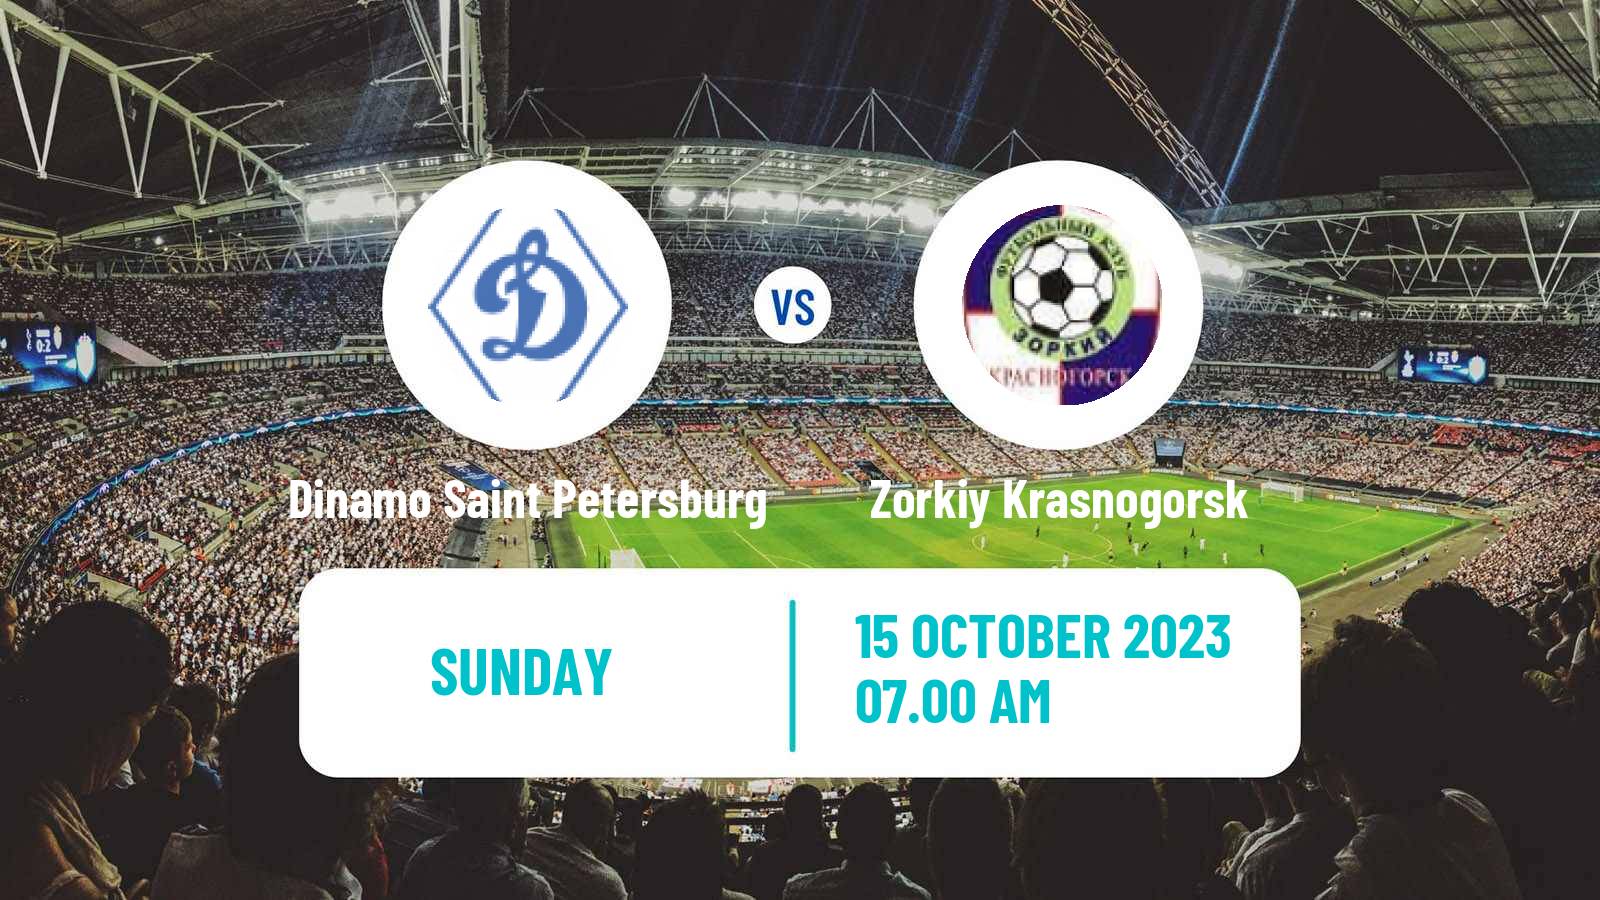 Soccer FNL 2 Division B Group 2 Dinamo Saint Petersburg - Zorkiy Krasnogorsk